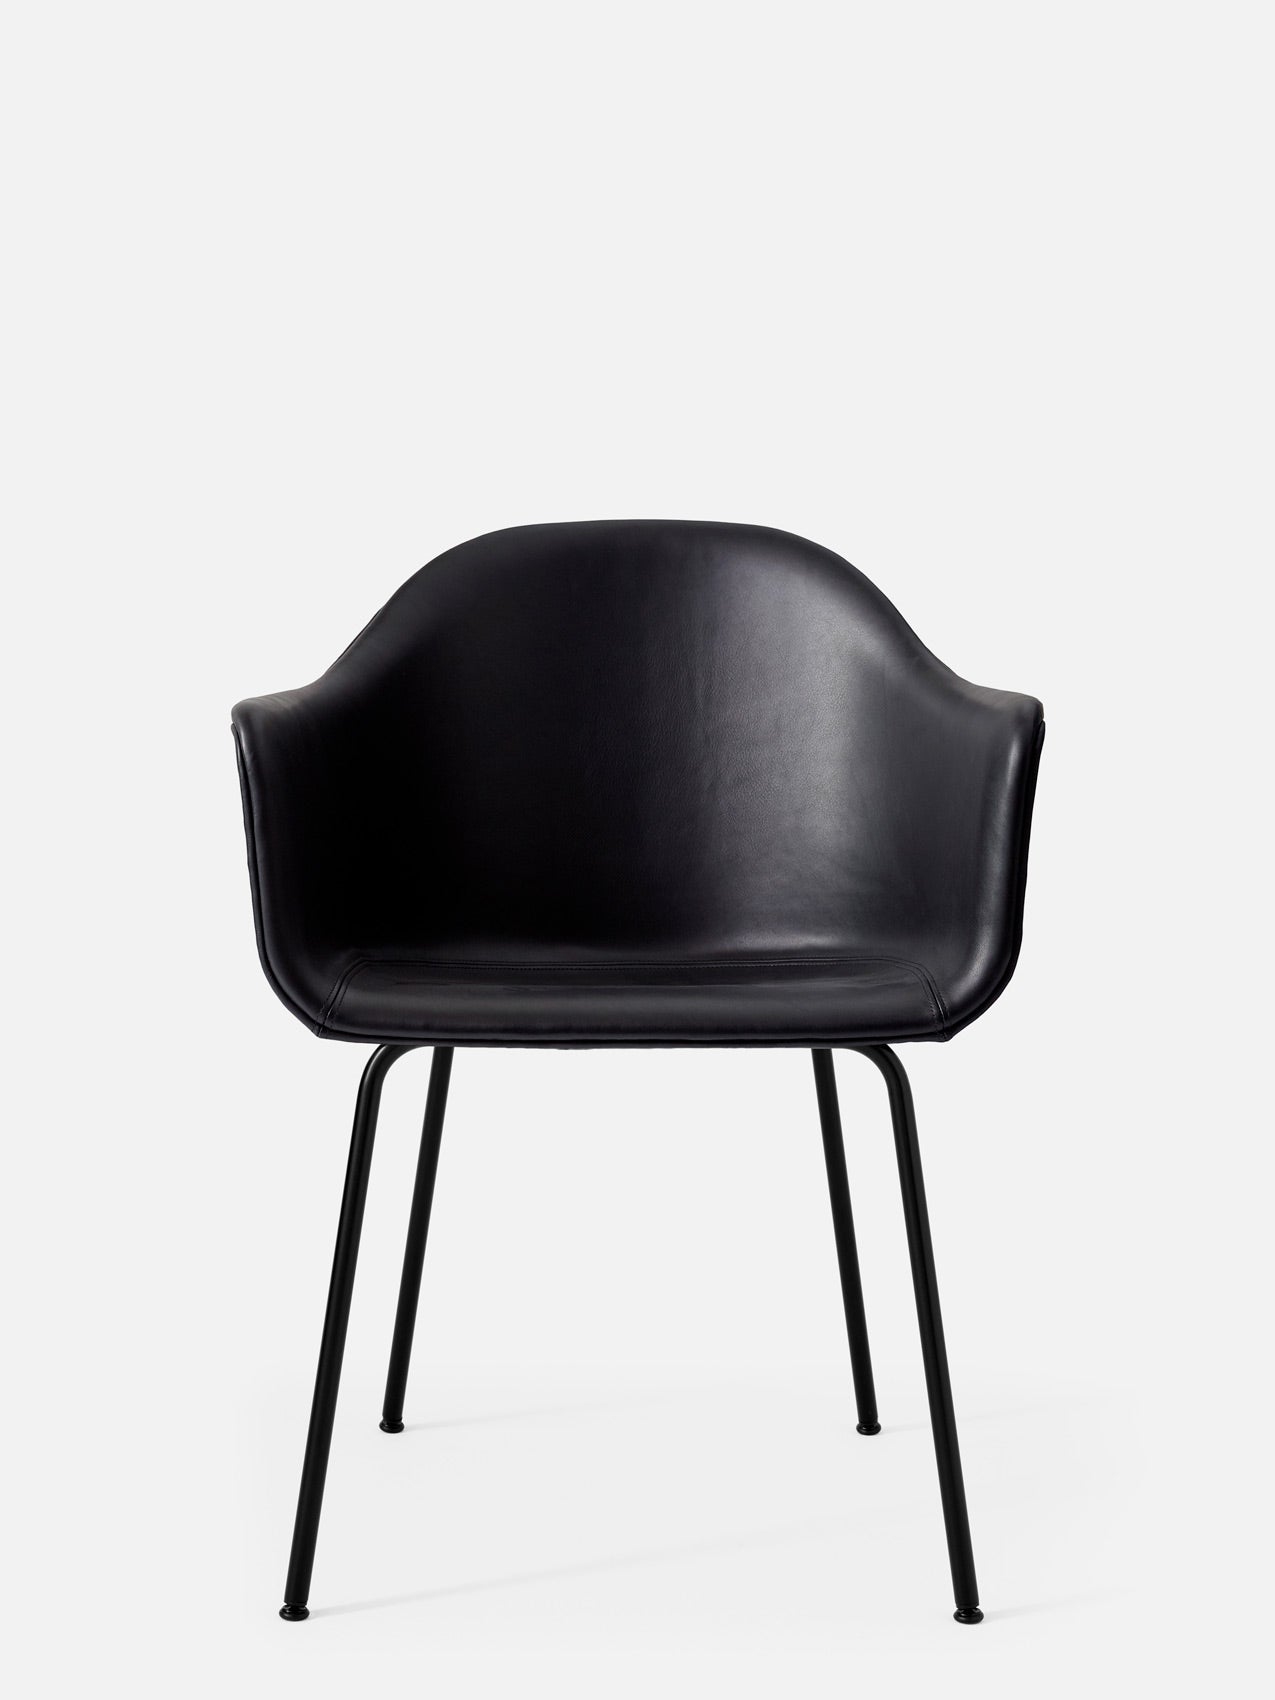 Harbour Arm Chair, Upholstered-Chair-Norm Architects-Black Steel-0842 Black/Dakar-menu-minimalist-modern-danish-design-home-decor